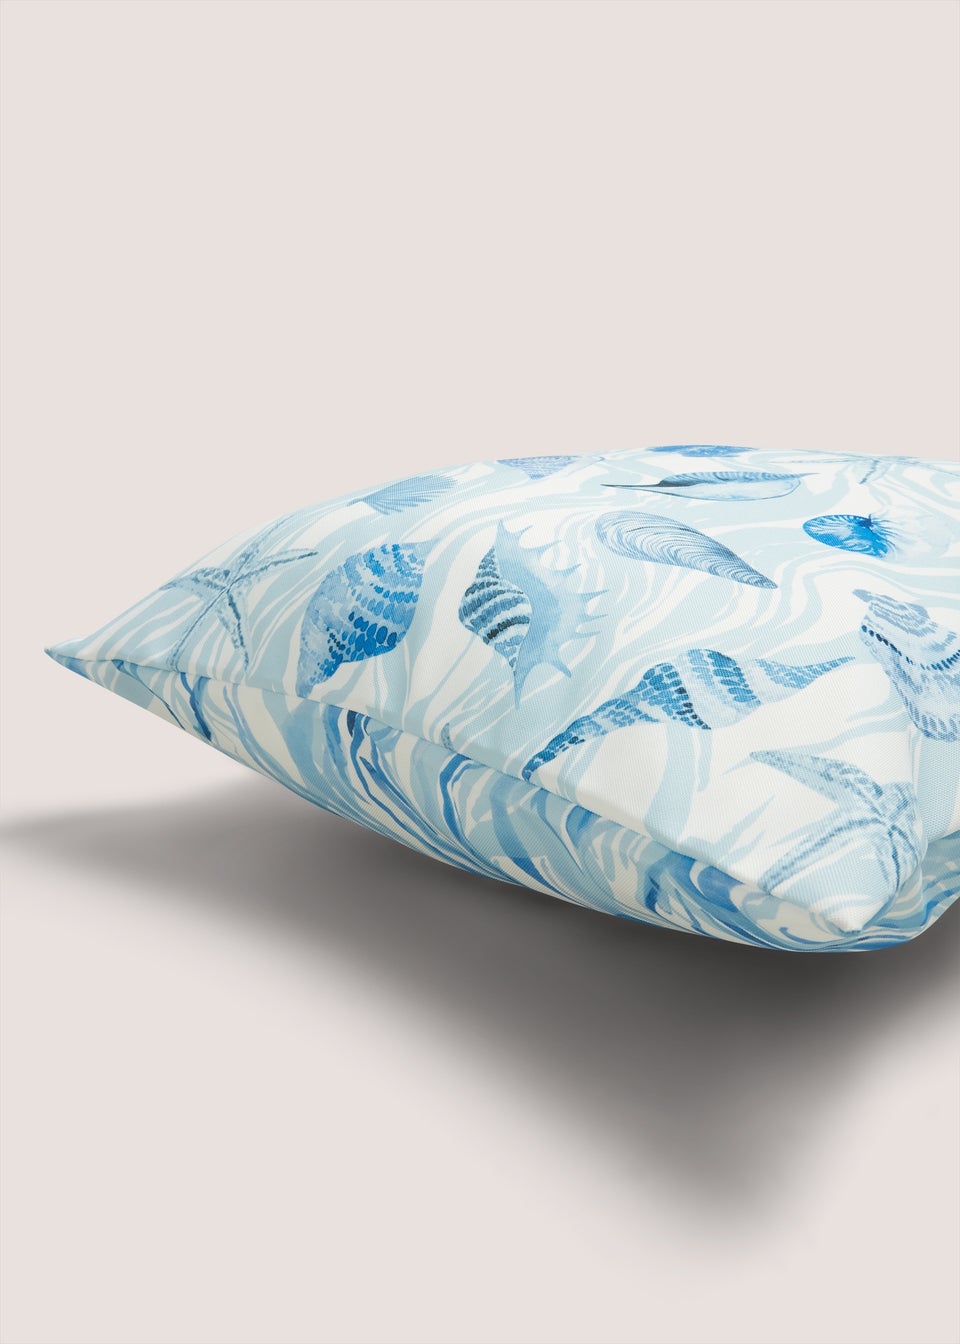 Blue Scatter Shell Cushion (43cm x 43cm)